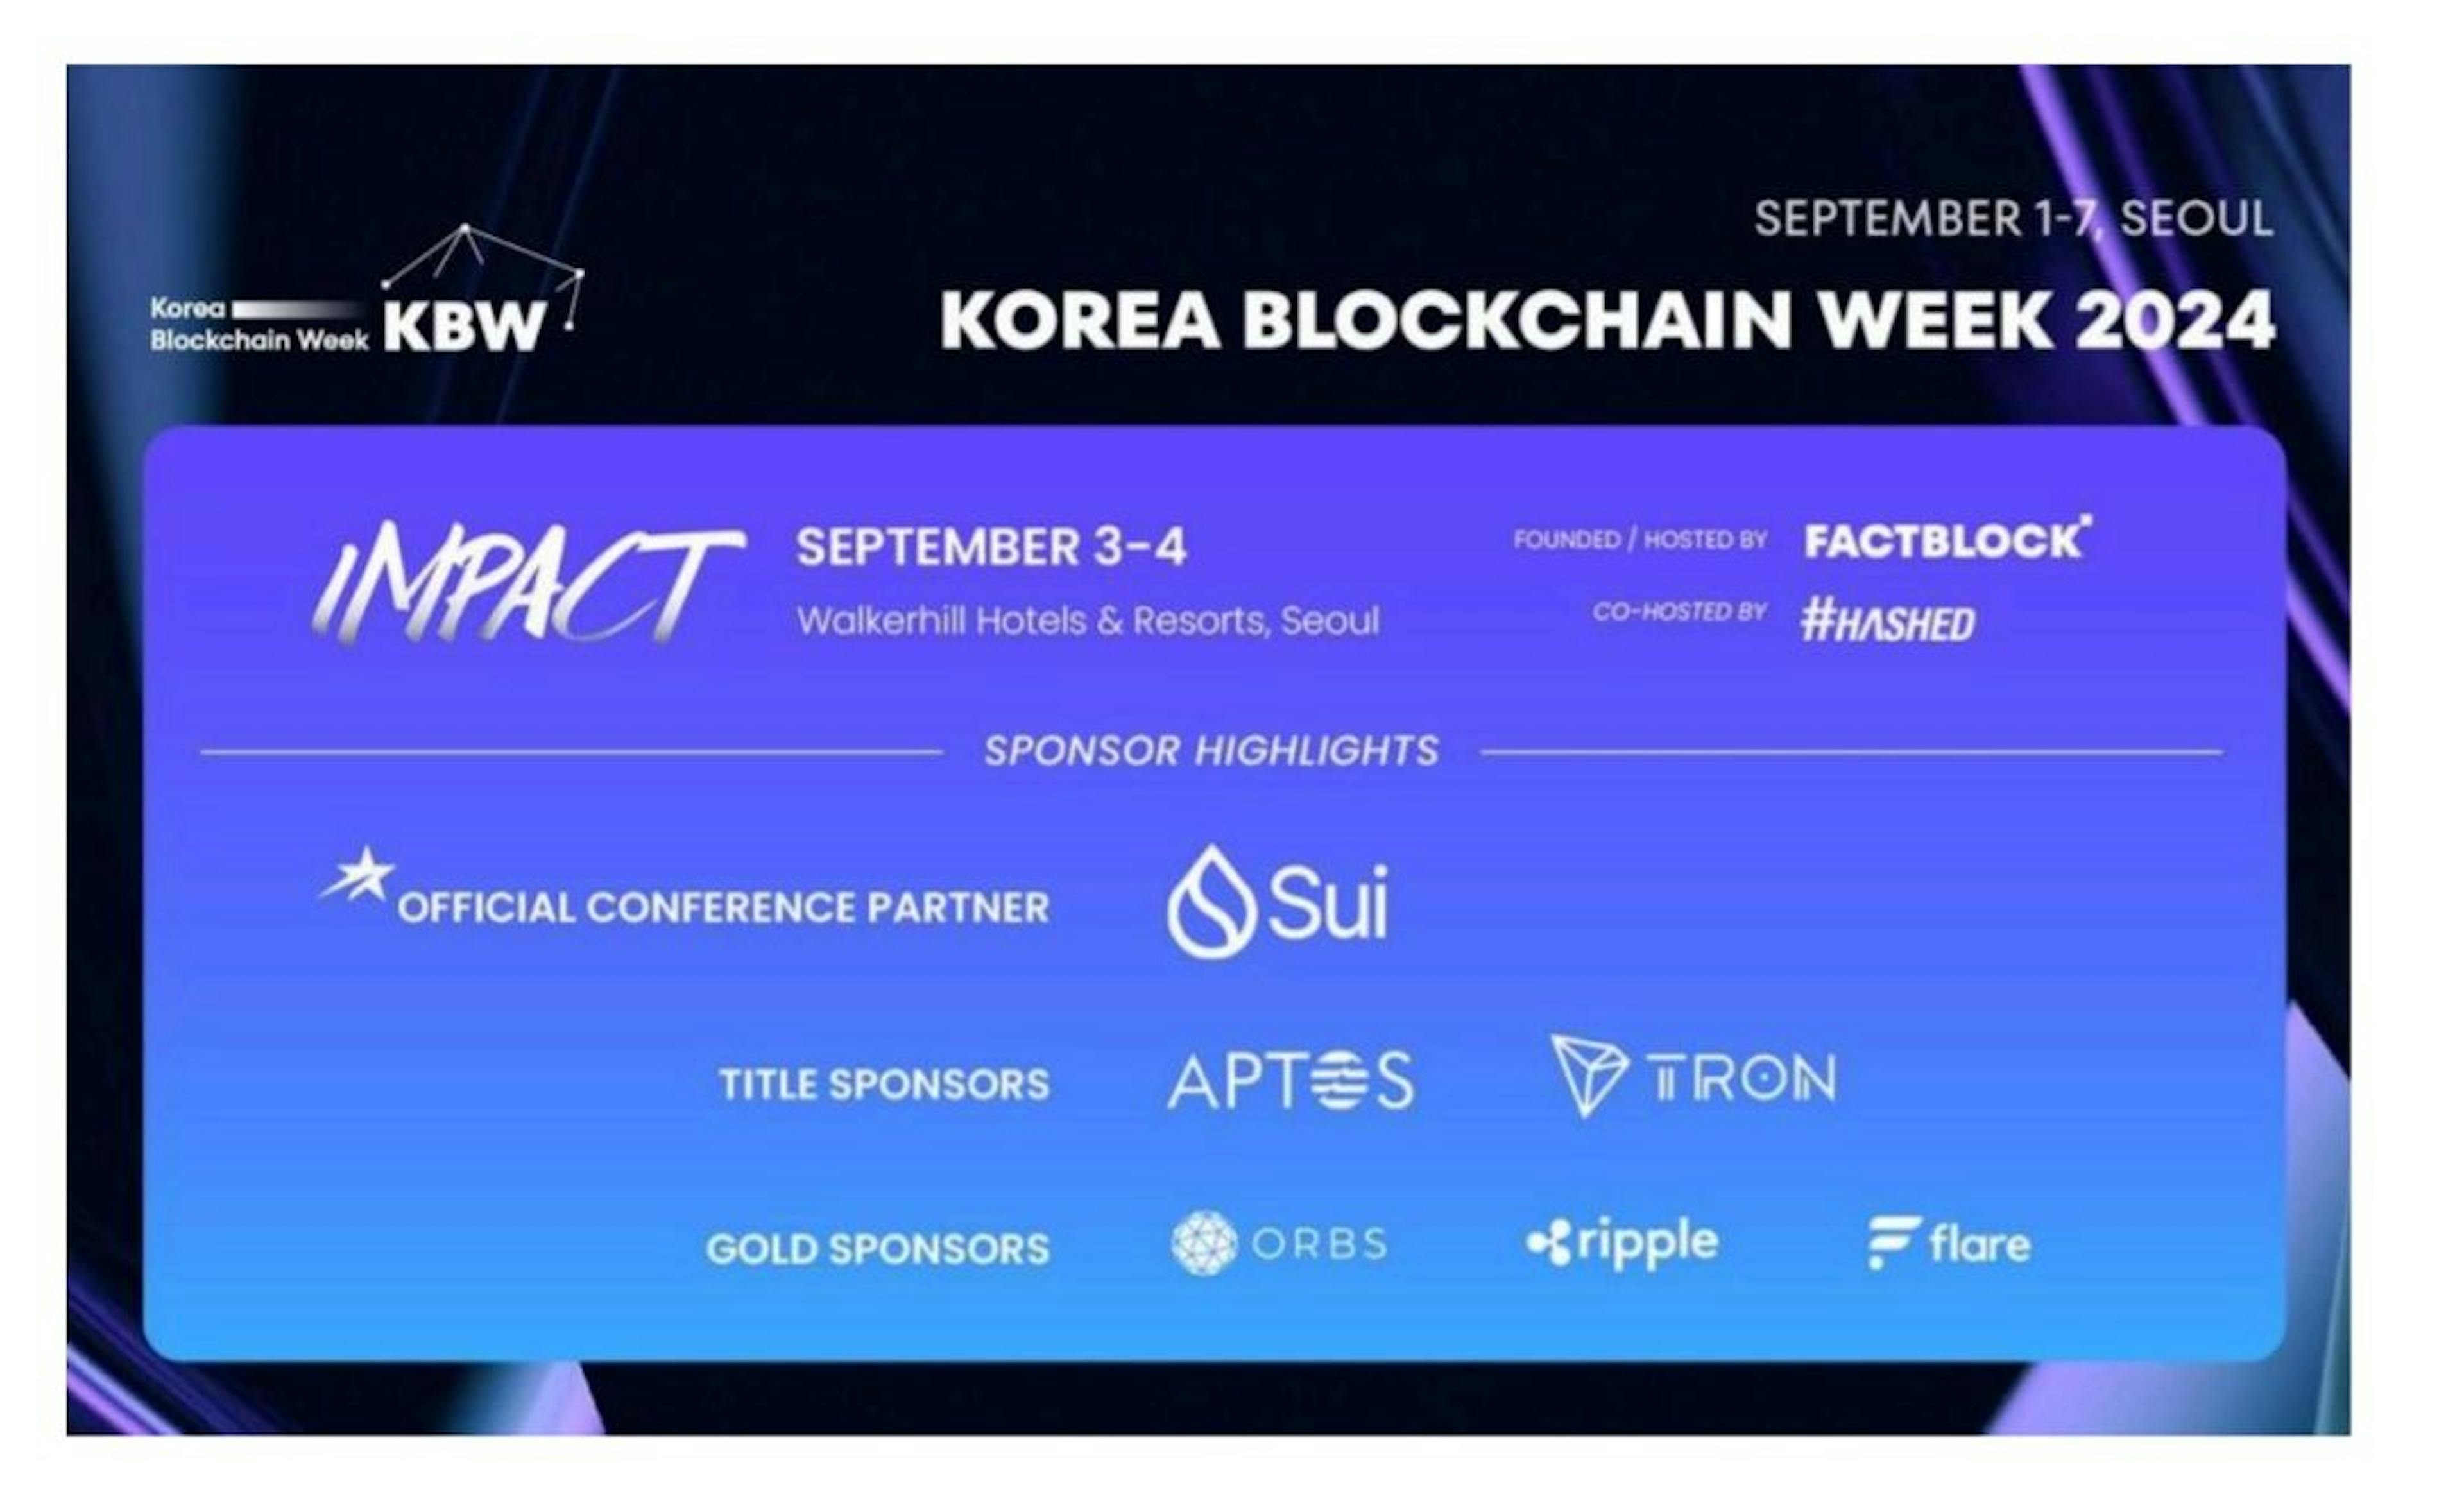 featured image - Korea Blockchain Week nomeia Sui como parceiro oficial da conferência e anuncia novos palestrantes